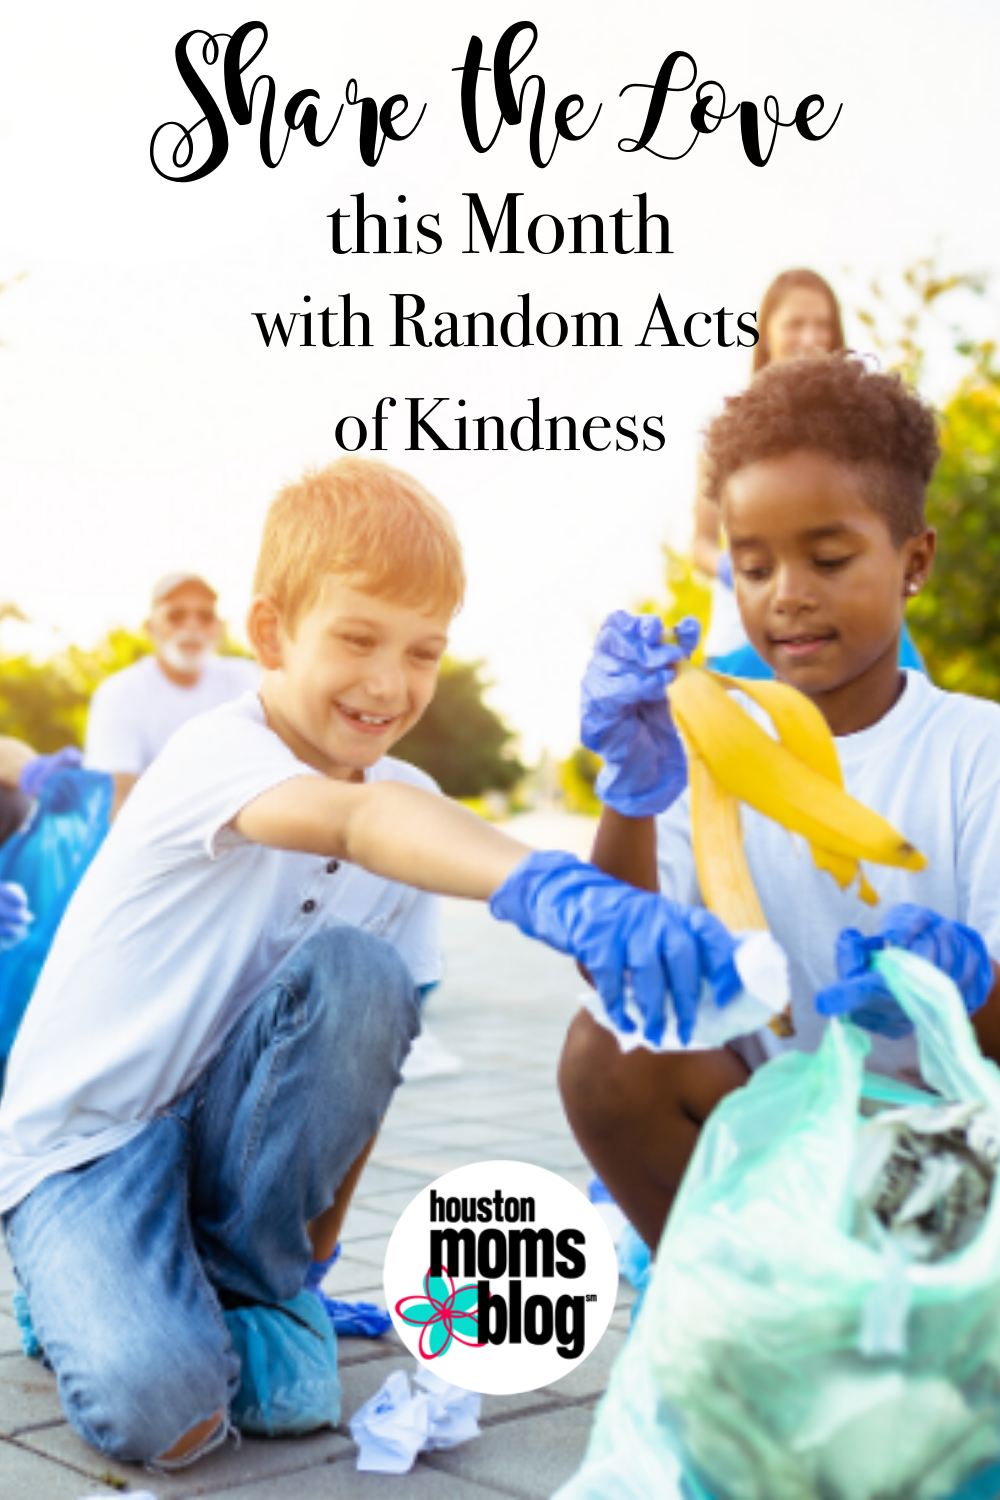 Houston Moms Blog "Share the Love this Month with Random Acts of Kindness" #houstonmomsblog #momsaroundhouston